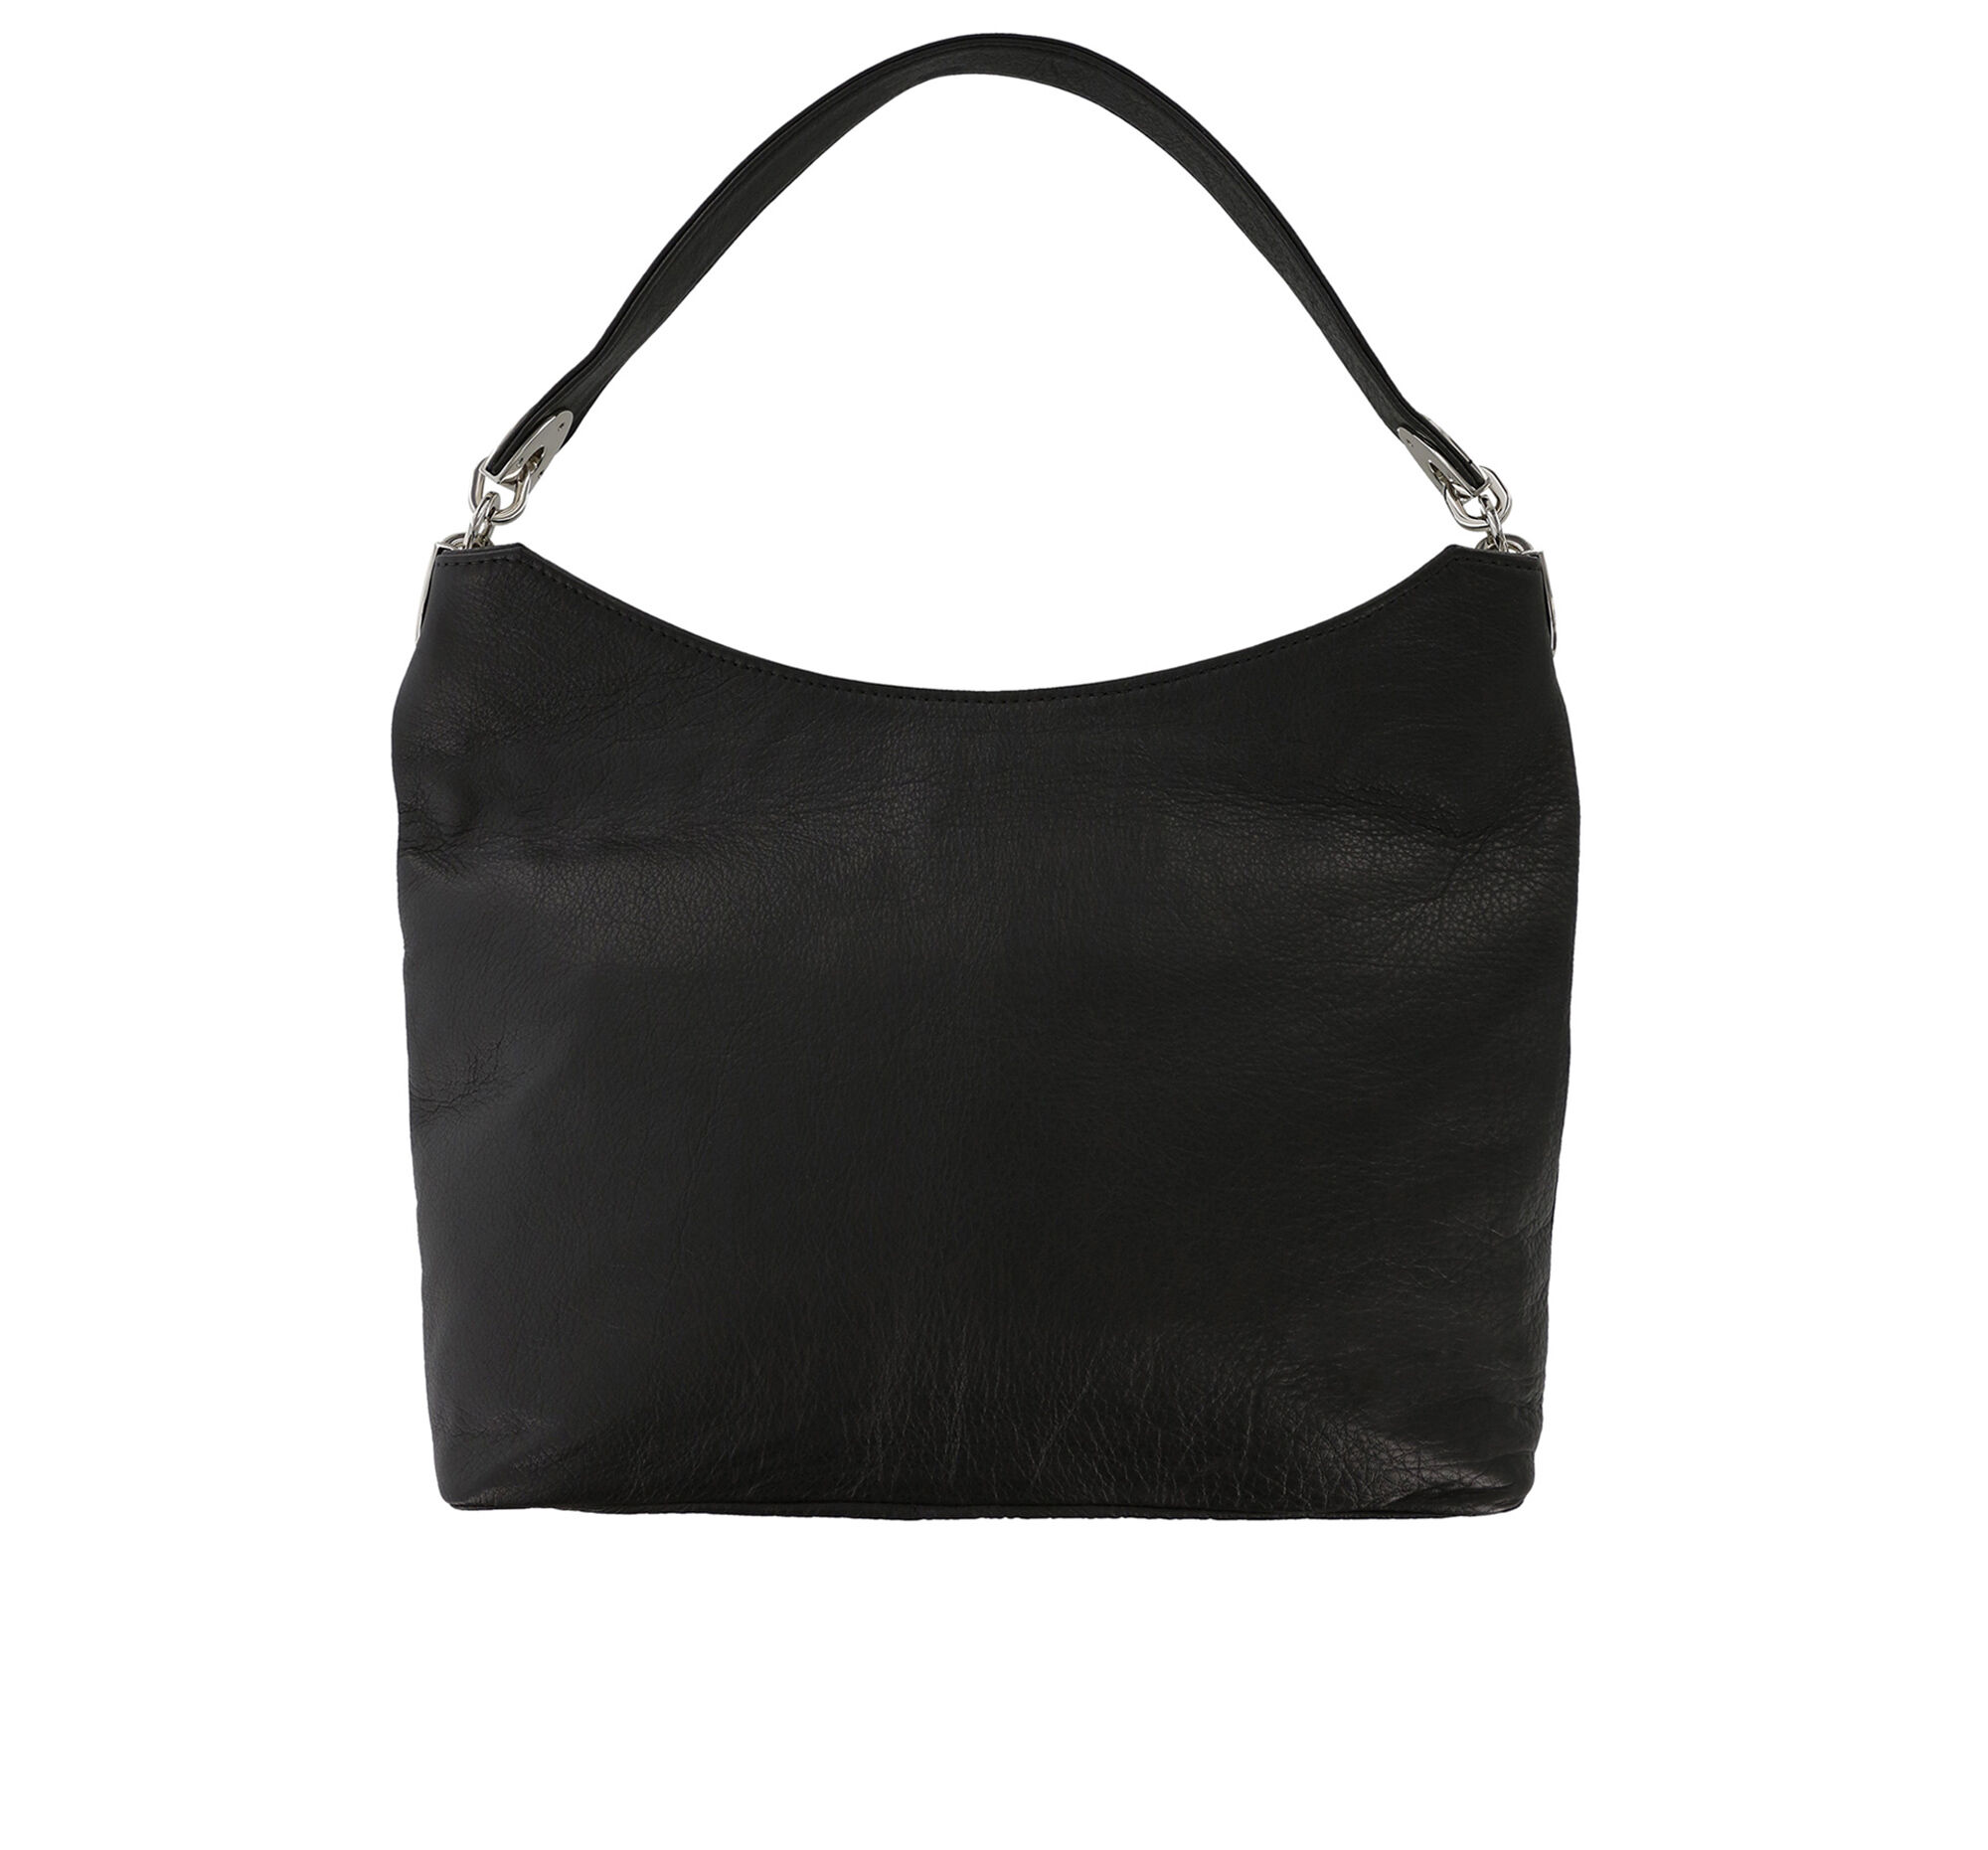 Vera Wang Simply Vera Black Leather Hobo Purse Handbag Boho Shoulder Bag  Purse | eBay